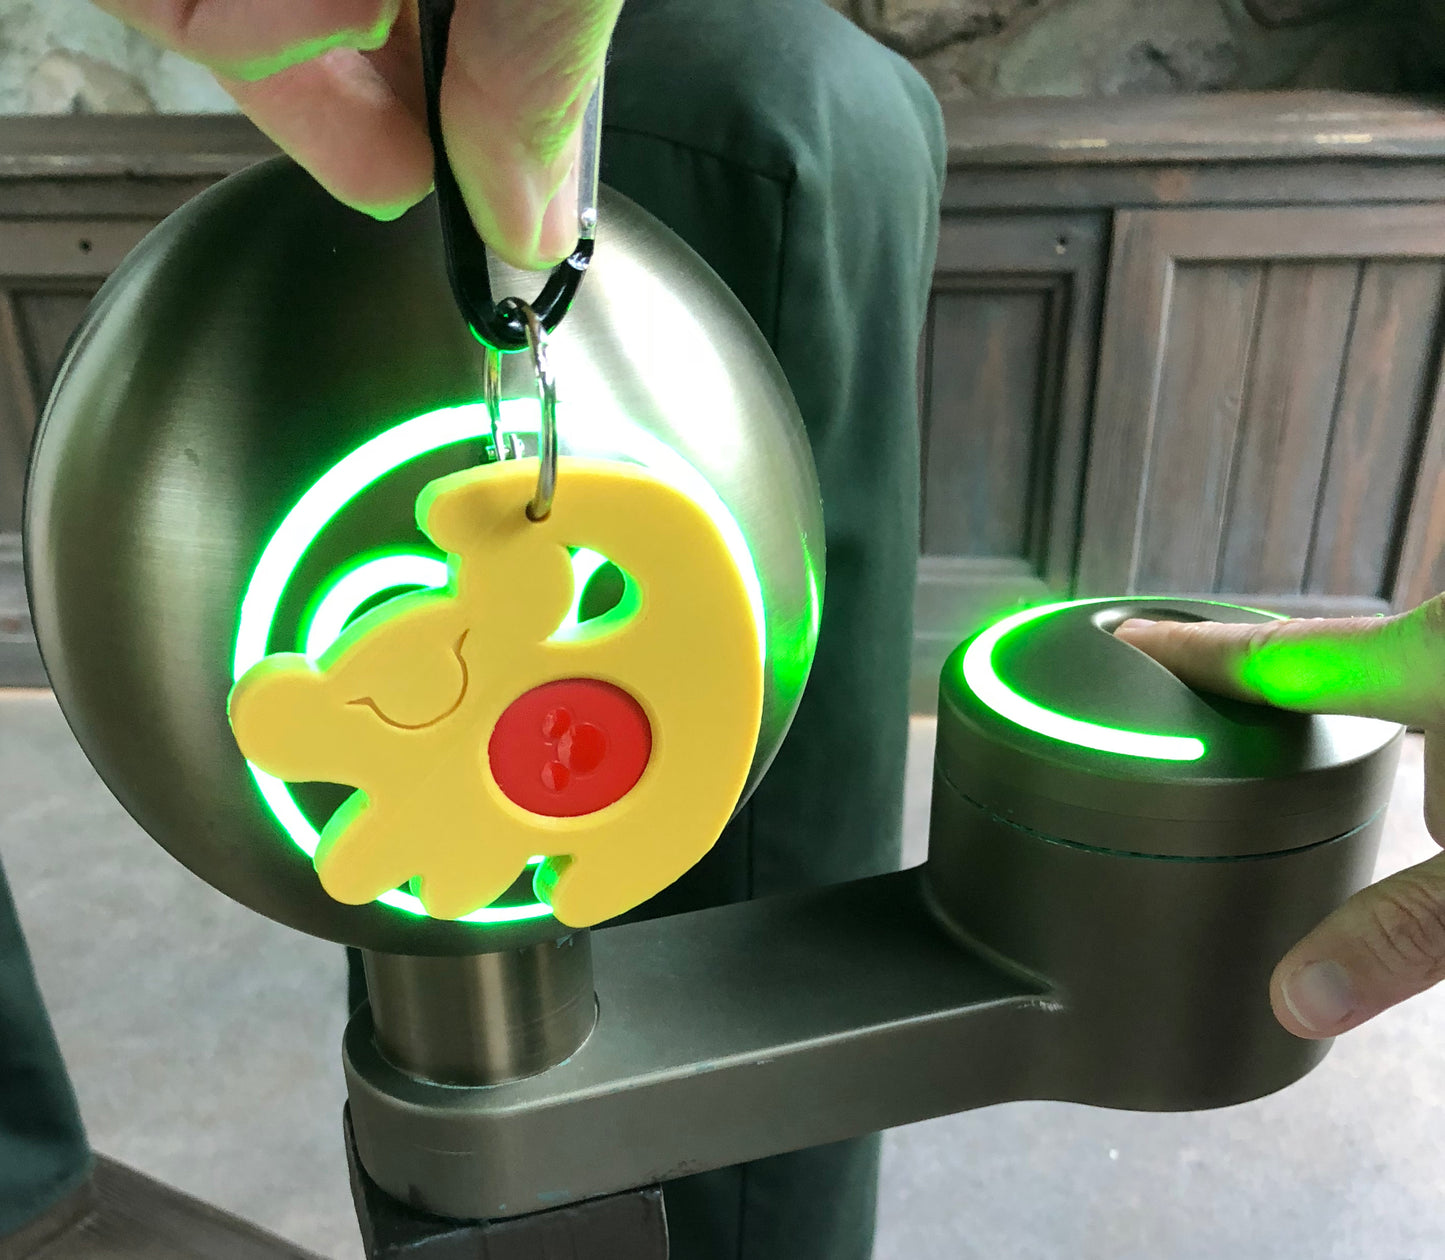 Simba Magic Band Buddy scanning into park kiosk with green ring lighting up